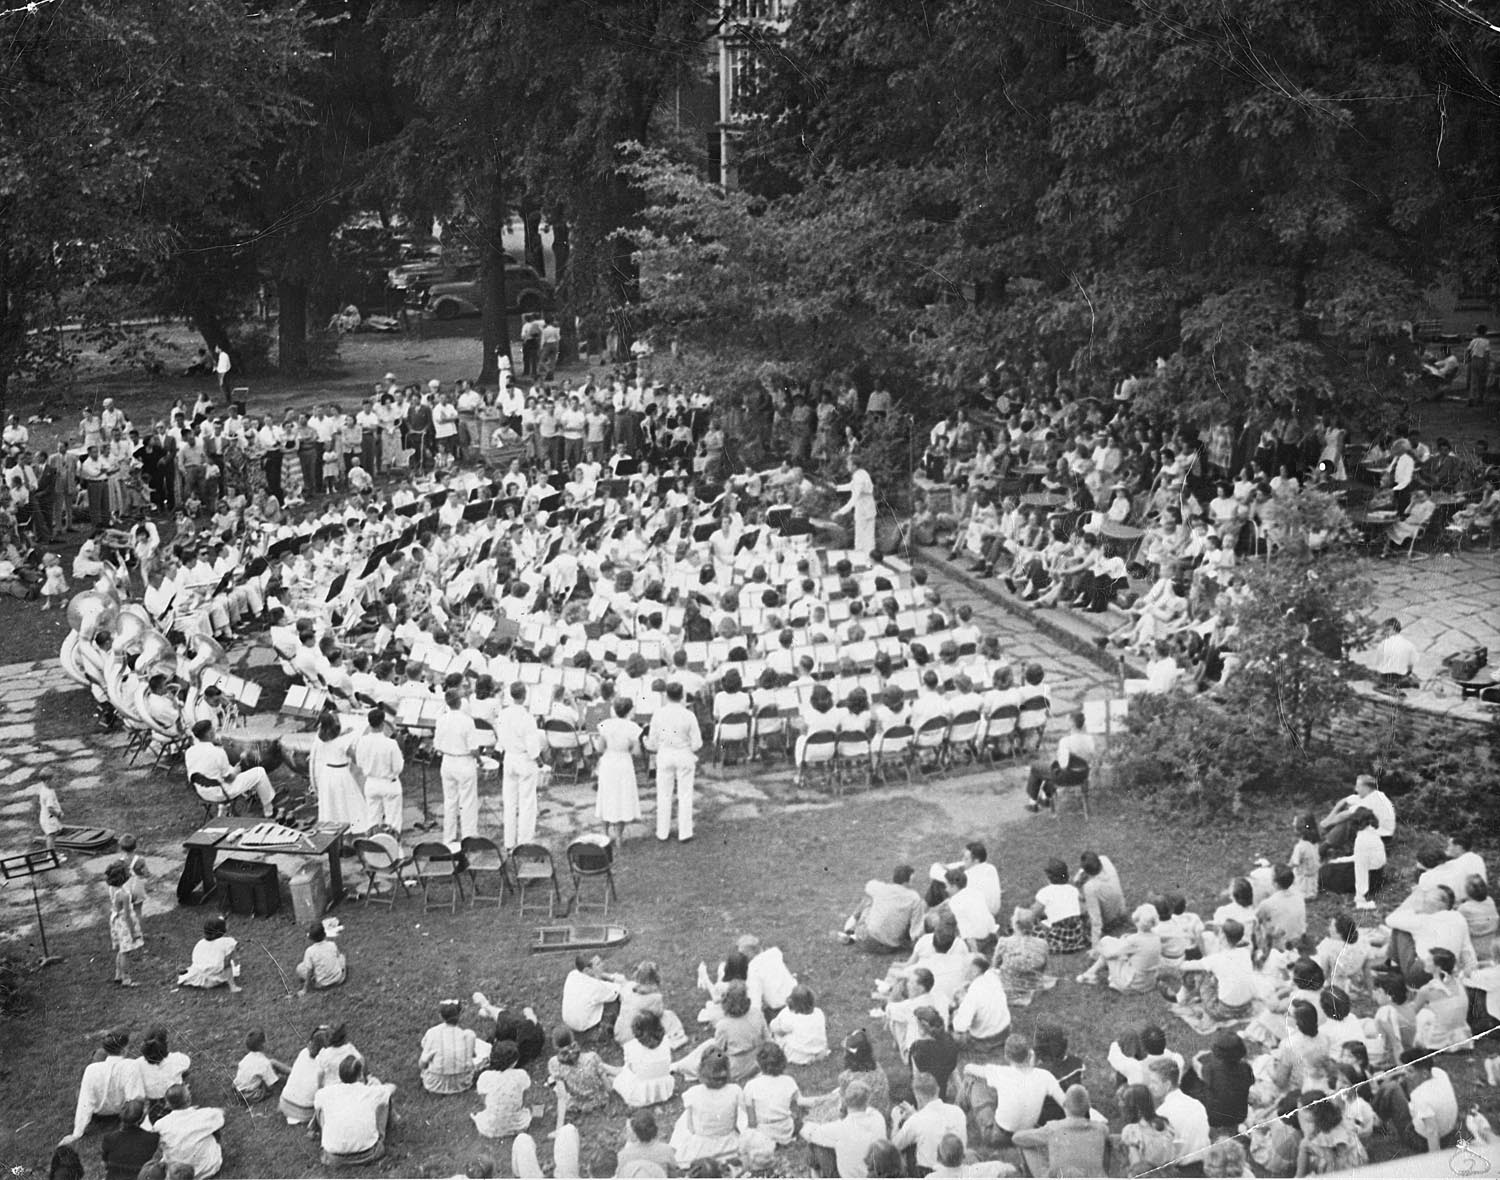 Summer concert, 1940s